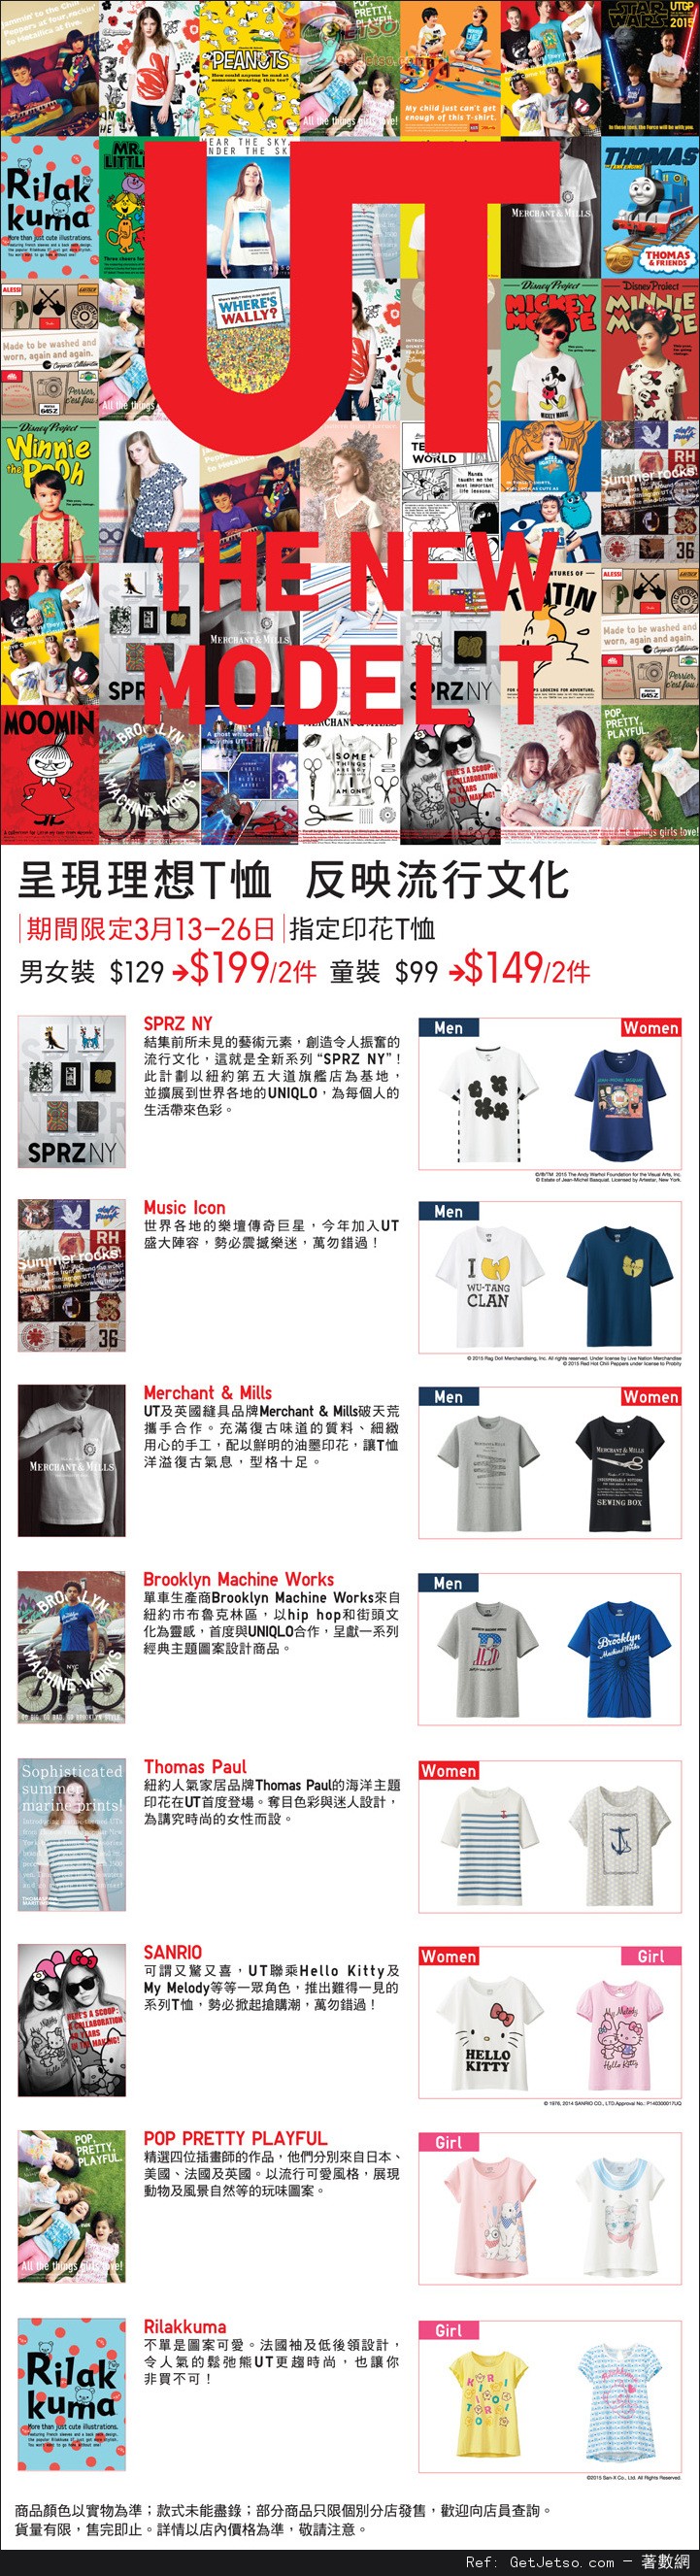 UNIQLO 指定印花T恤限定價購買優惠(至15年3月26日)圖片1